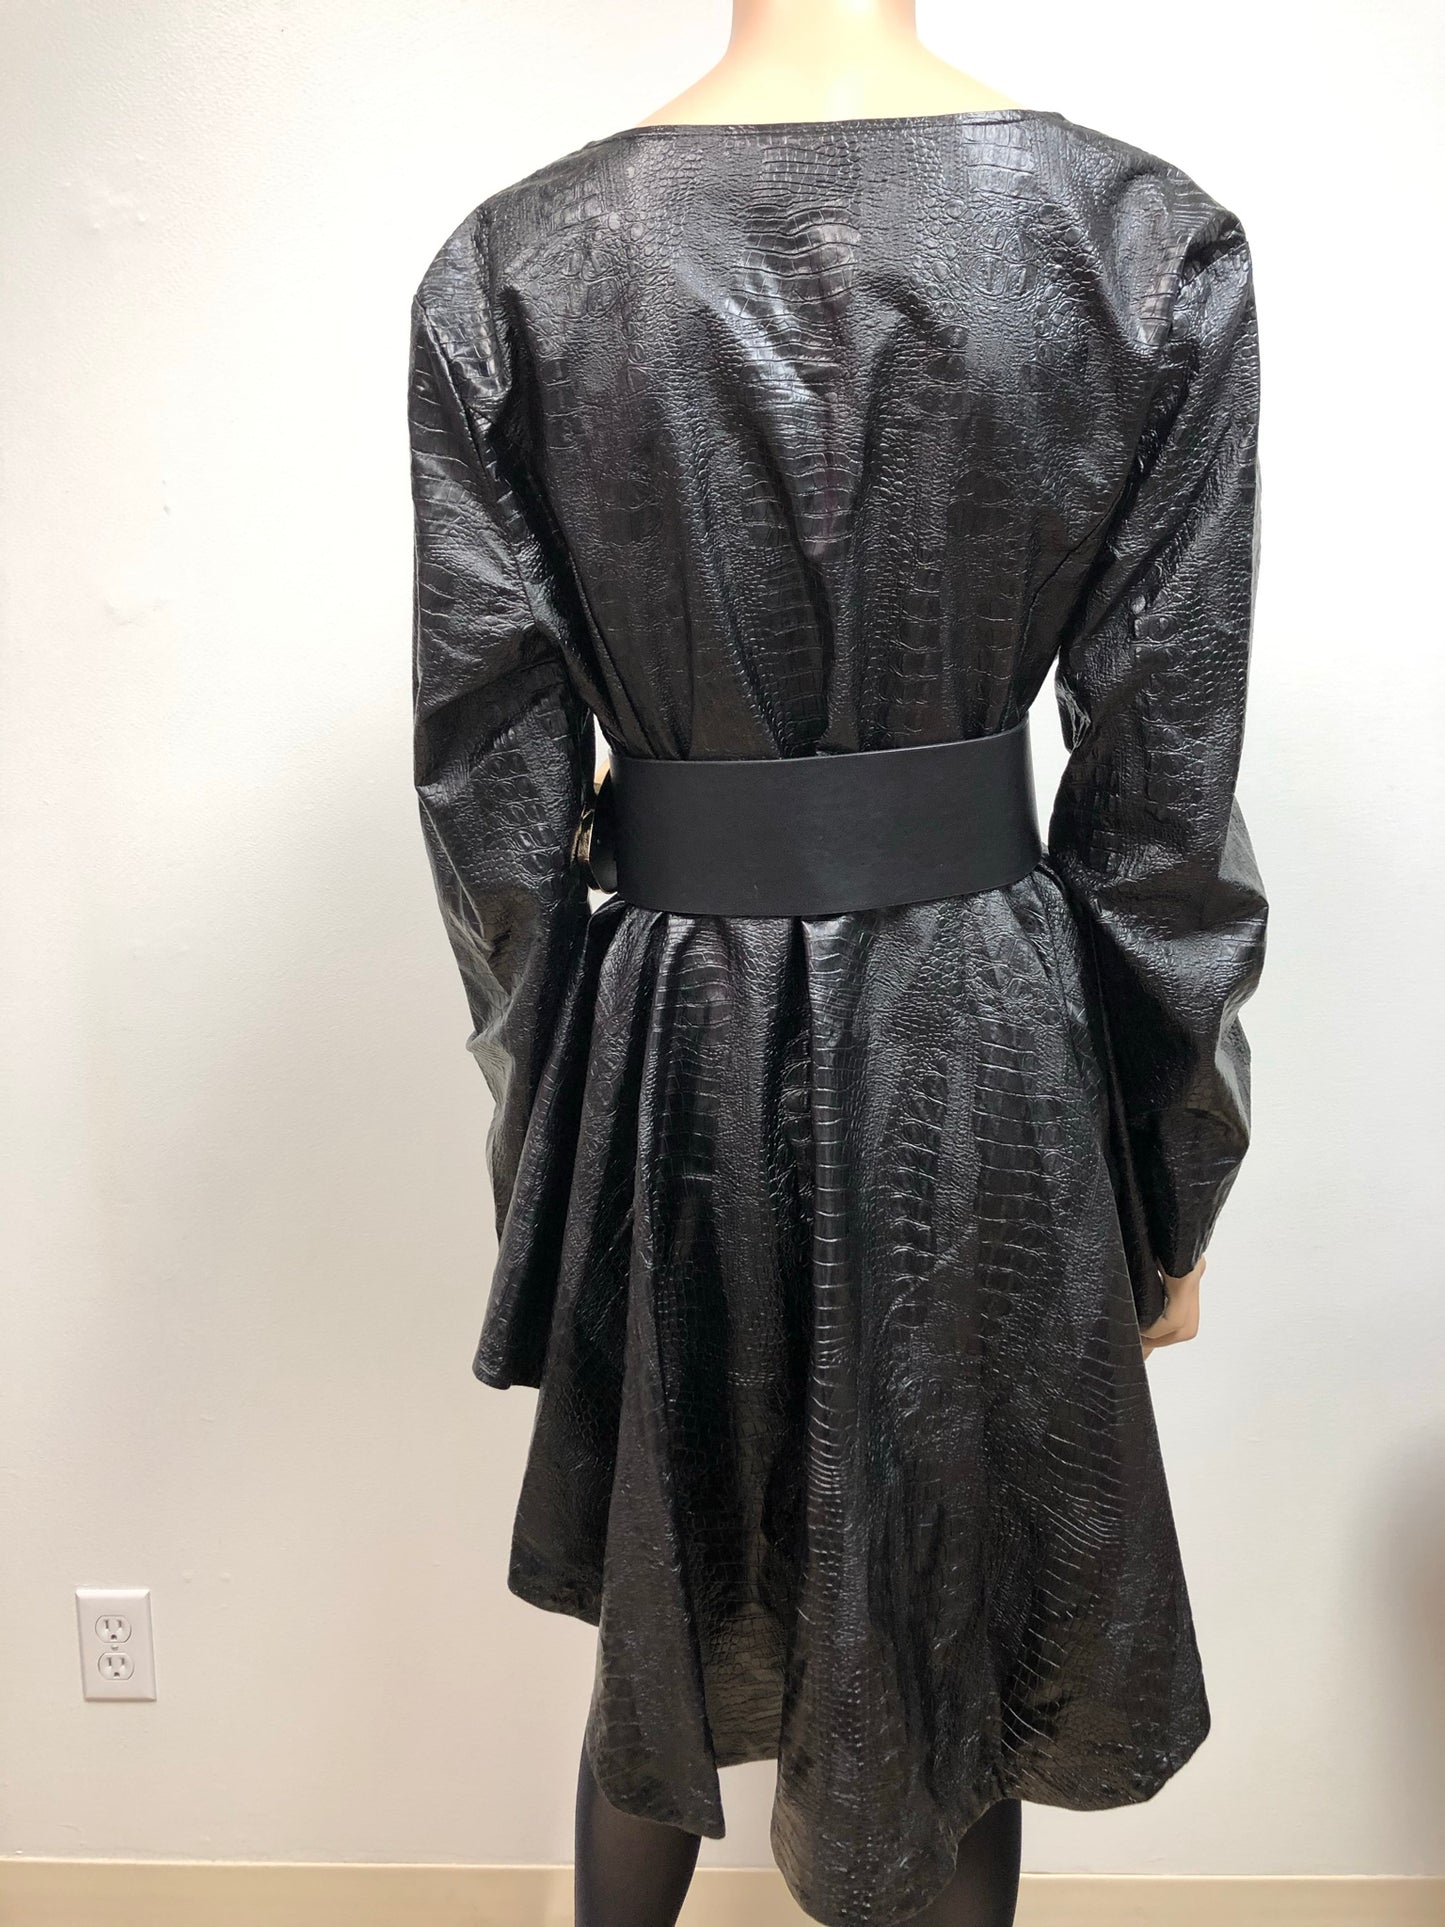 Vintage Jessica Faux Leather Peplum Jacket Size Free up to 3x